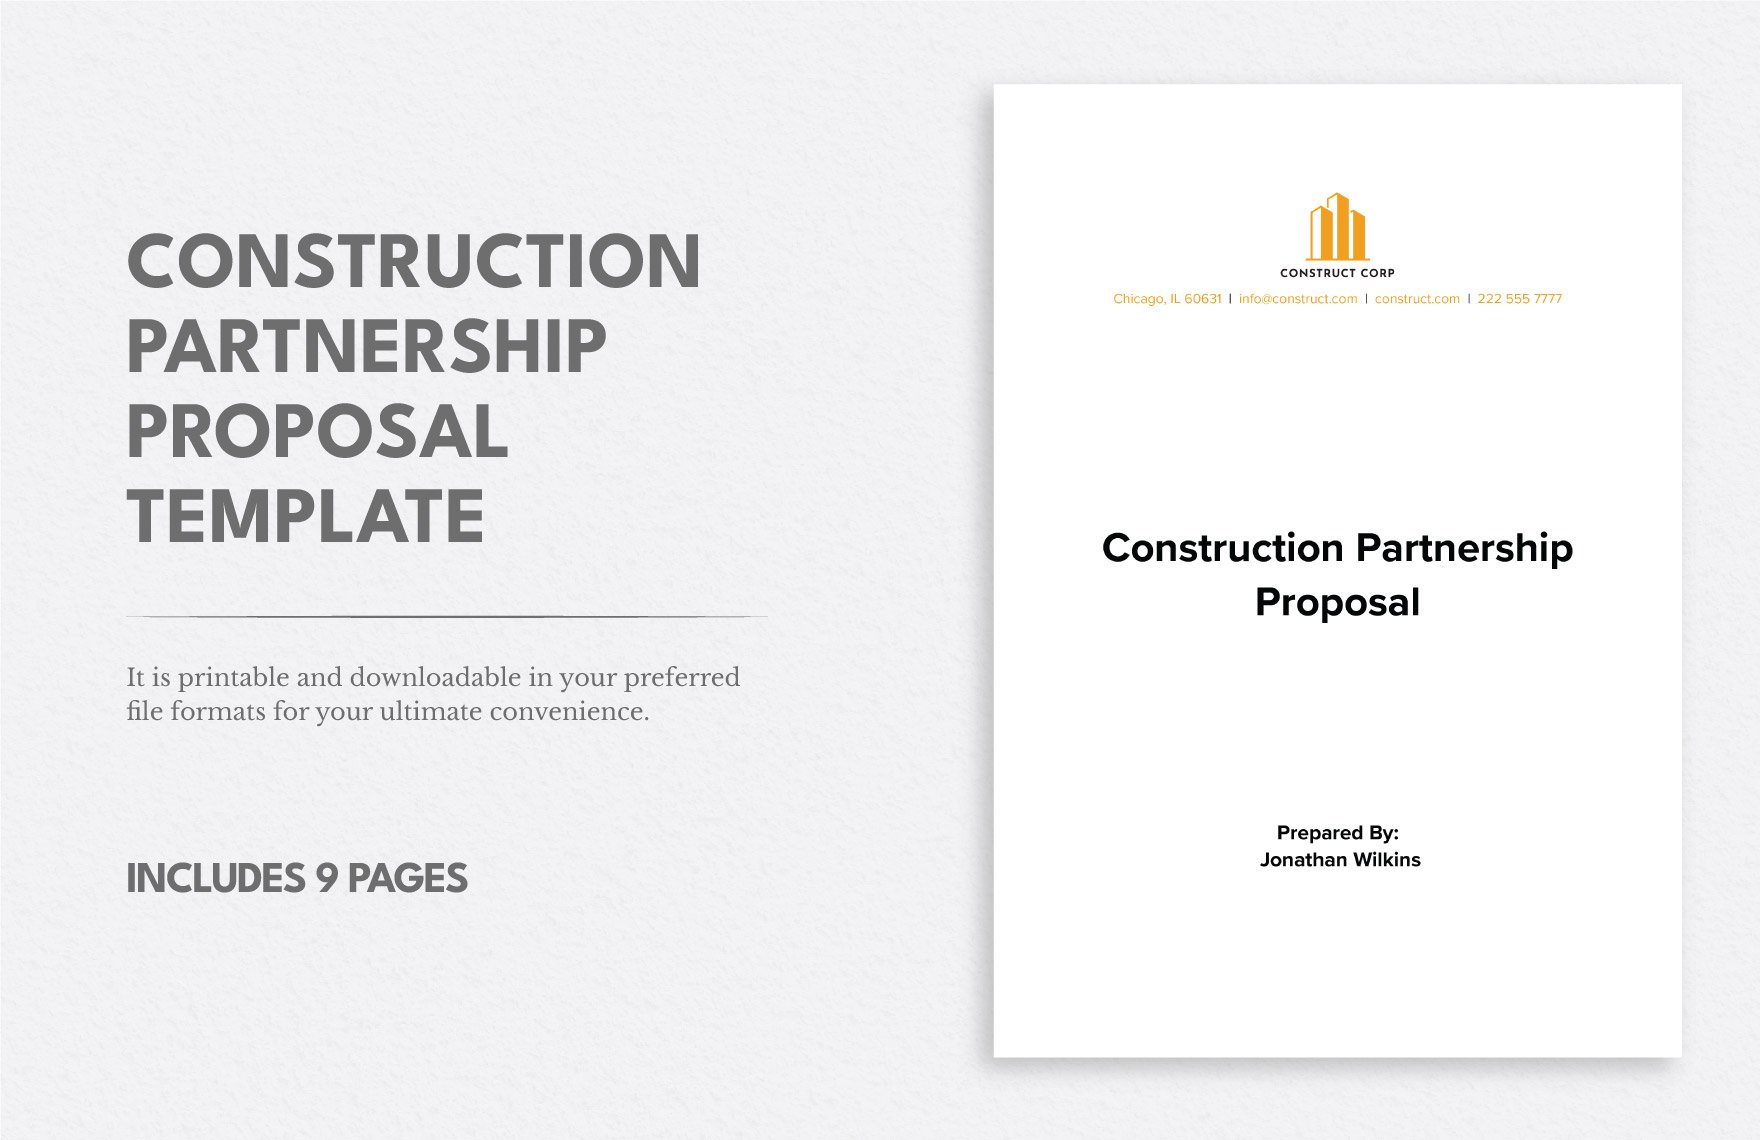 Construction Partnership Proposal Template